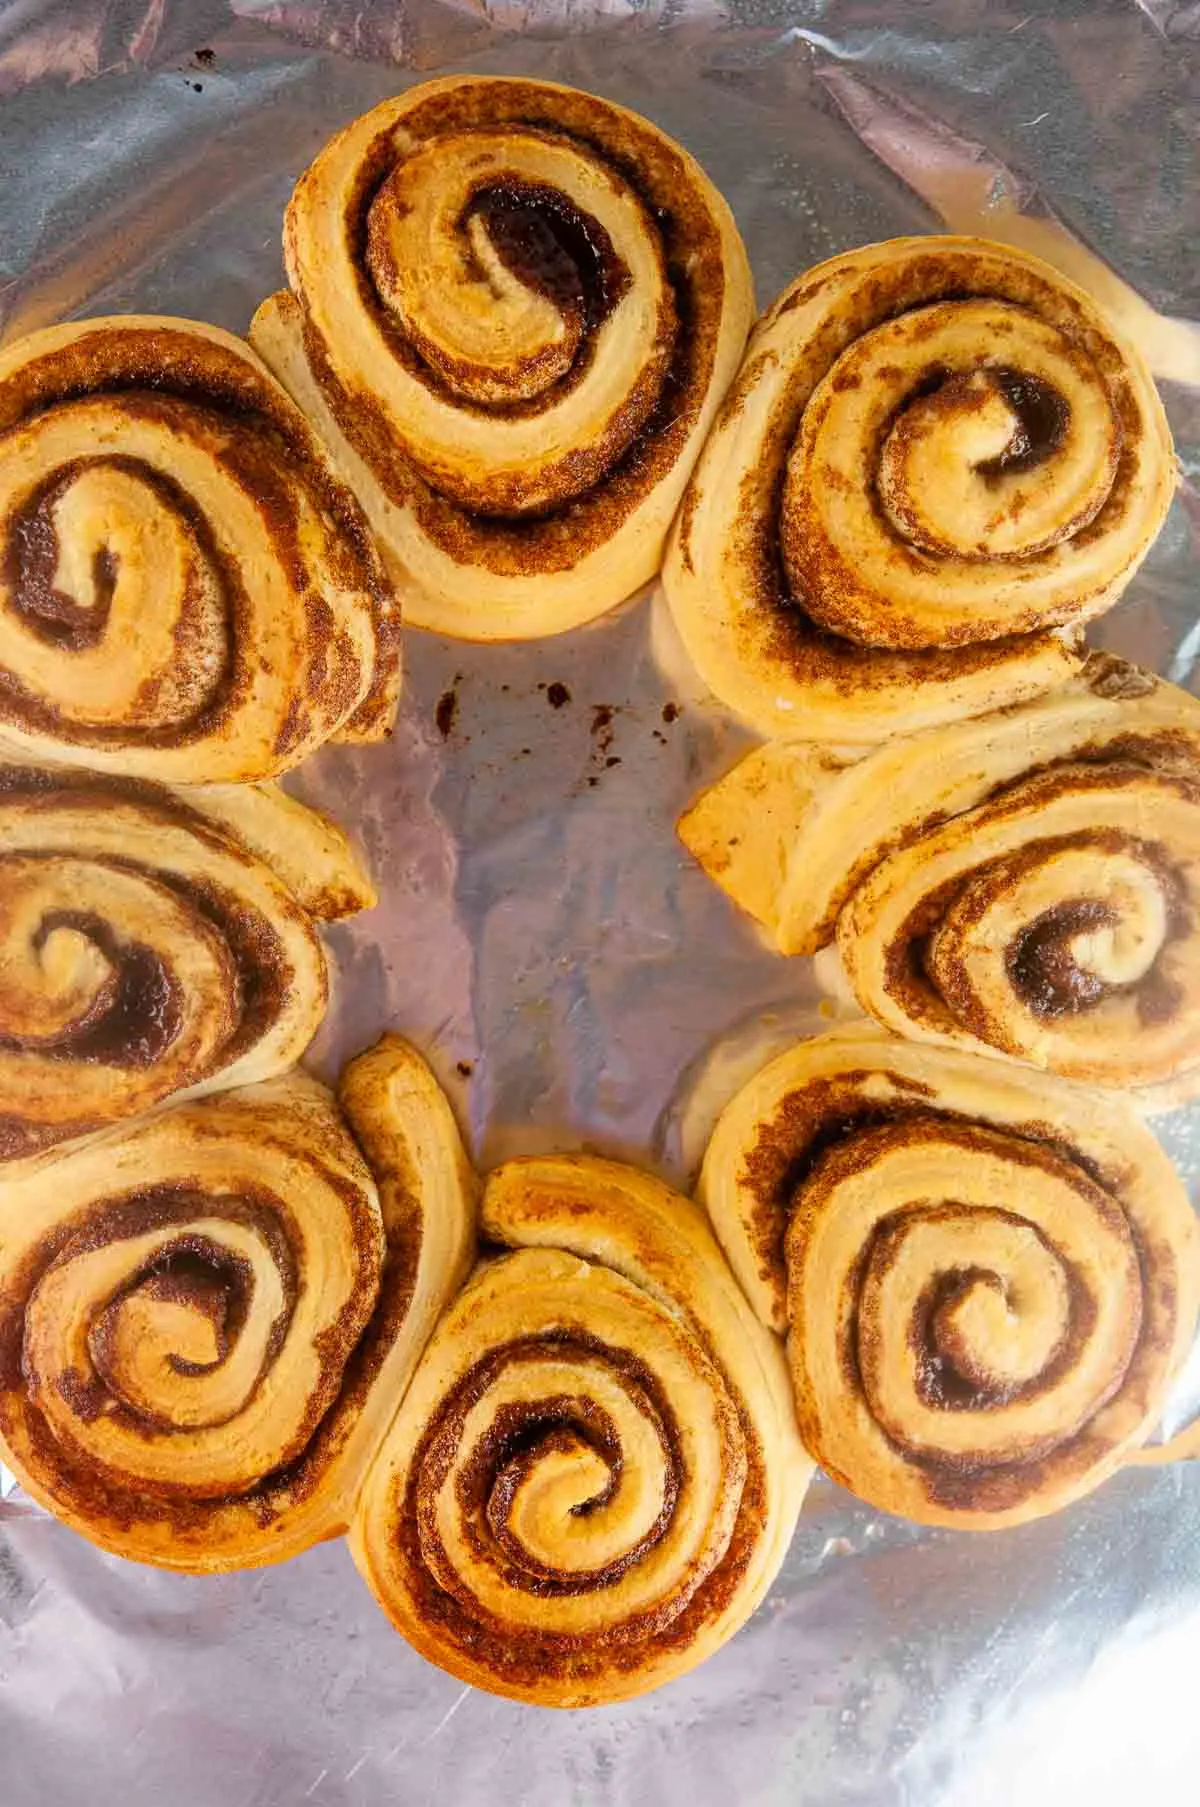 Bake the cinnamon roll wreath until the cinnamon rolls are golden brown.